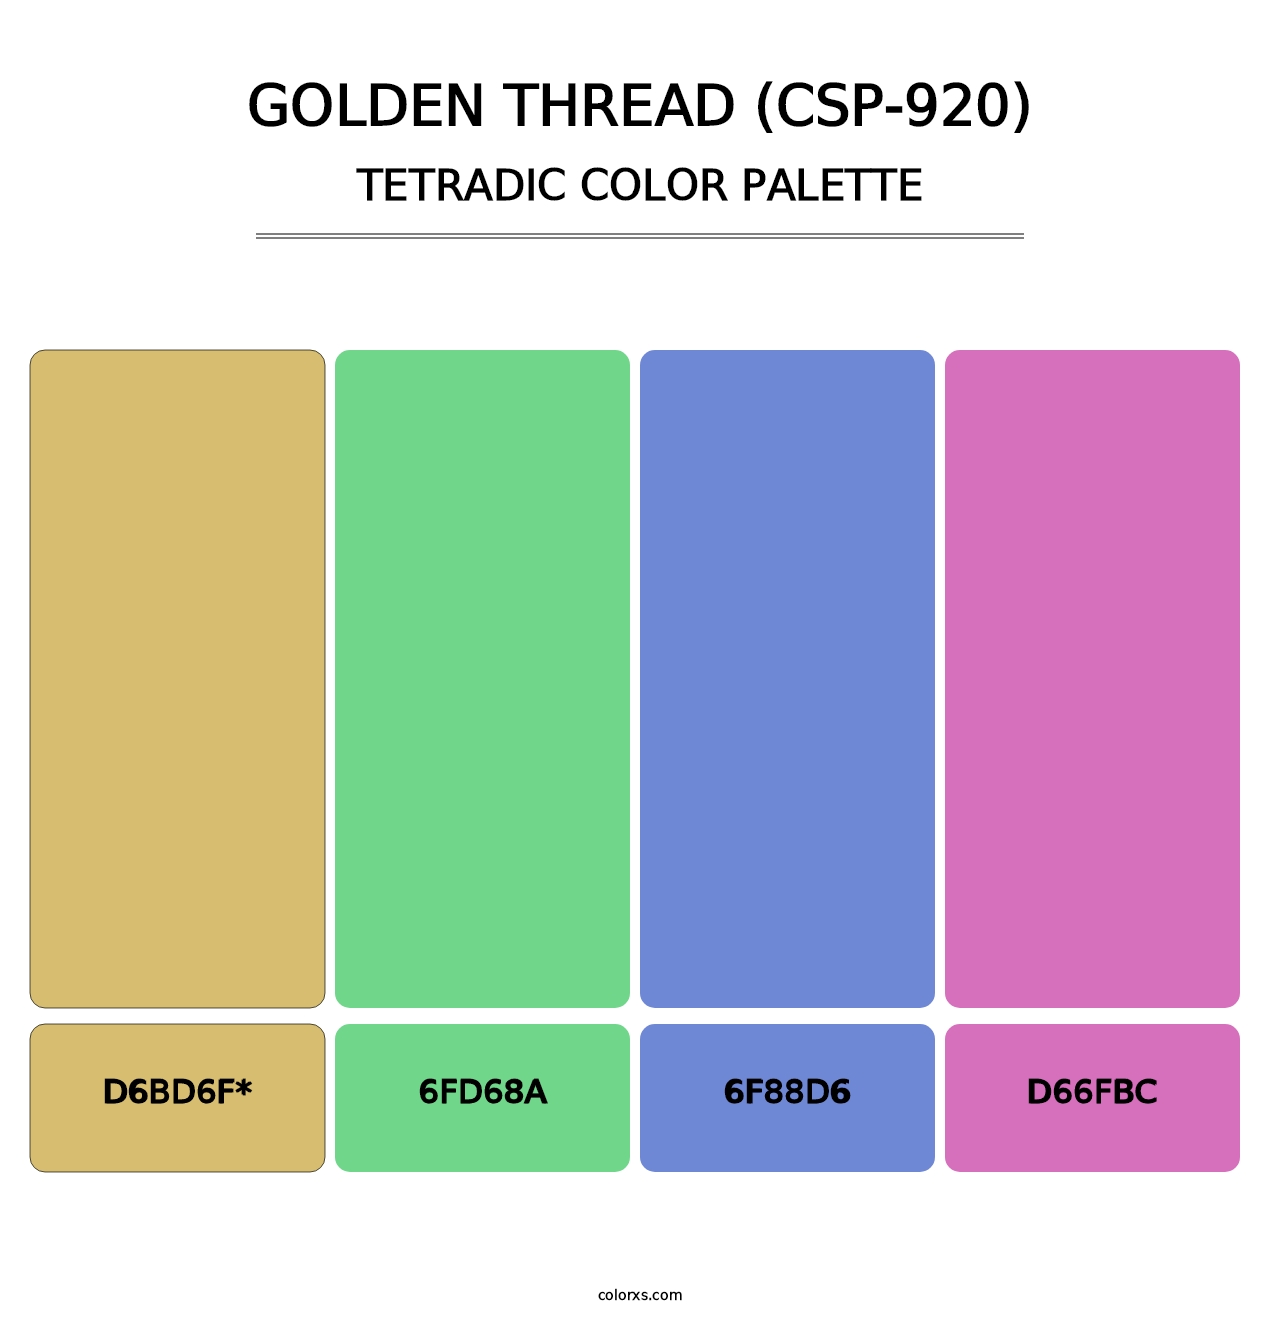 Golden Thread (CSP-920) - Tetradic Color Palette